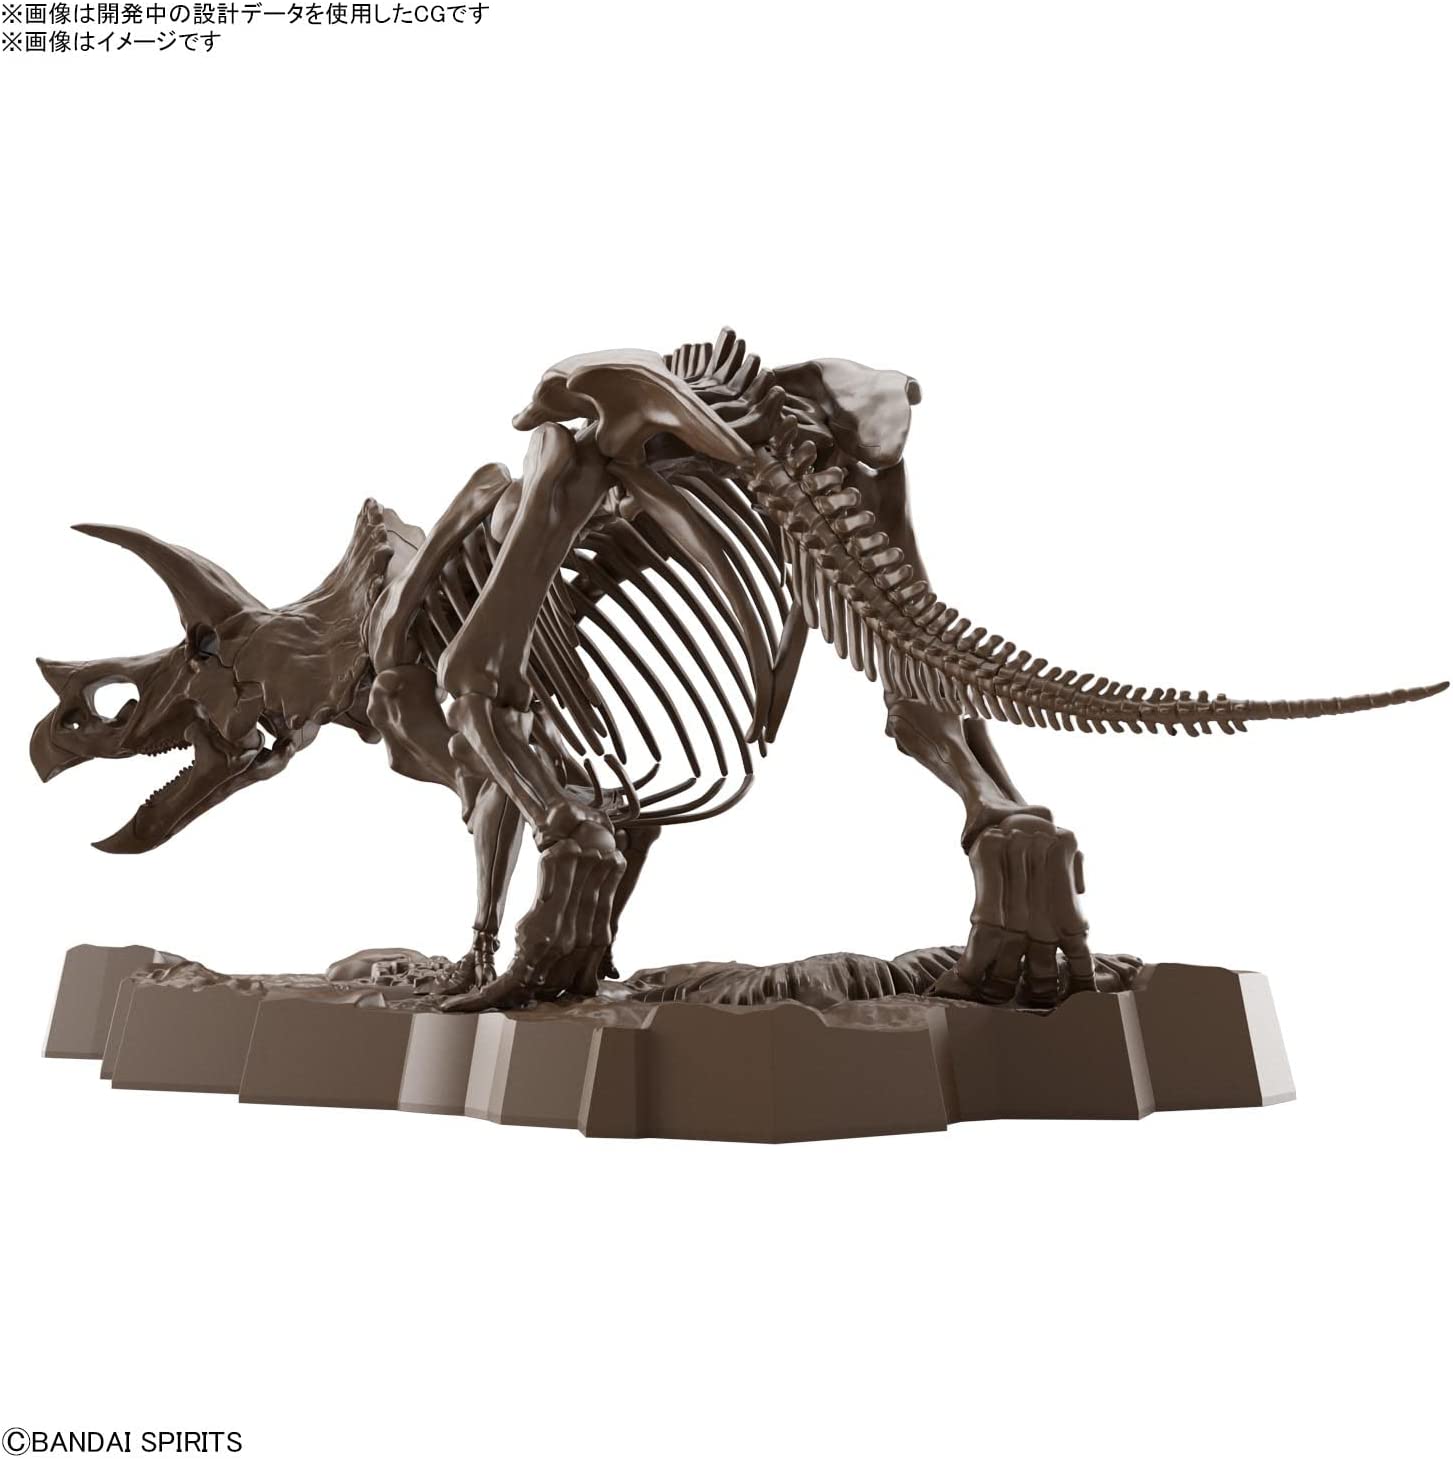 Imaginary Skeleton Triceratops 1/32 Scale Plastic Model